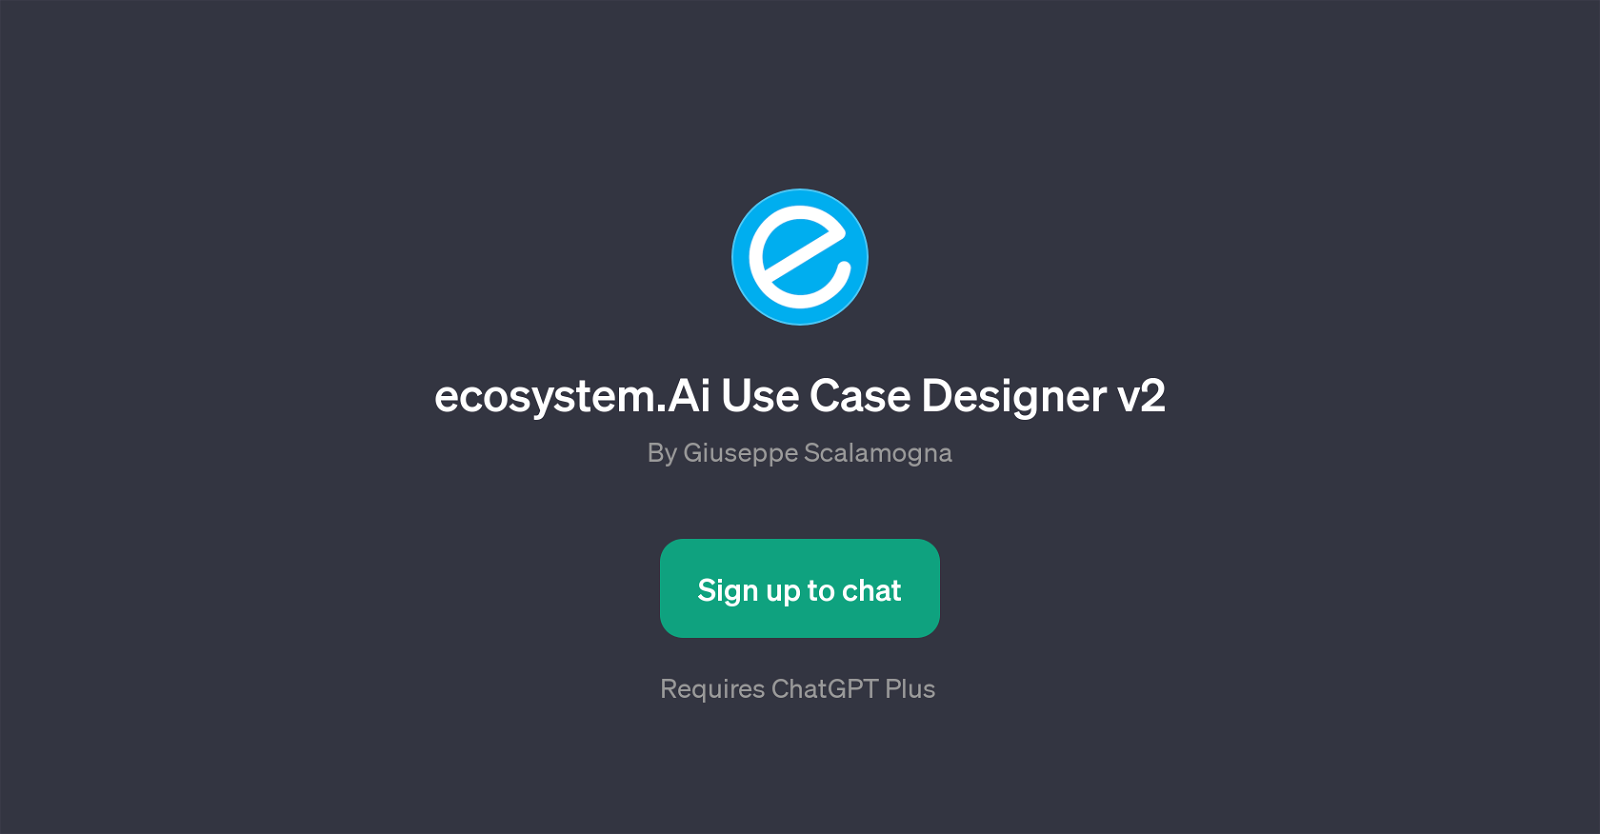 ecosystem.Ai Use Case Designer v2 website